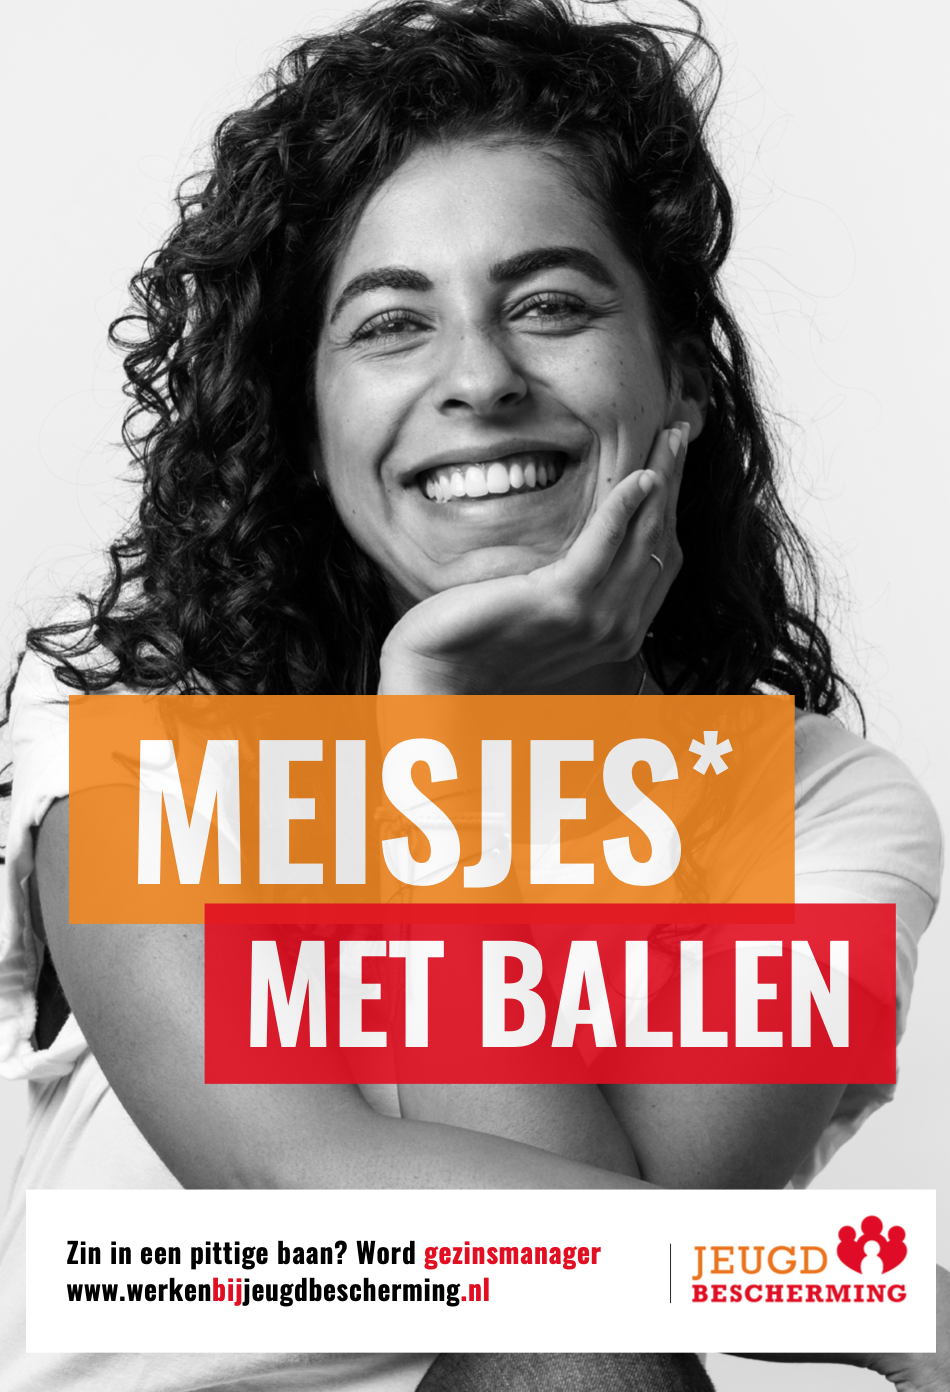 Arbeidsmarkt campagne Jeugdbescherming Amsterdam - meisjes met ballen